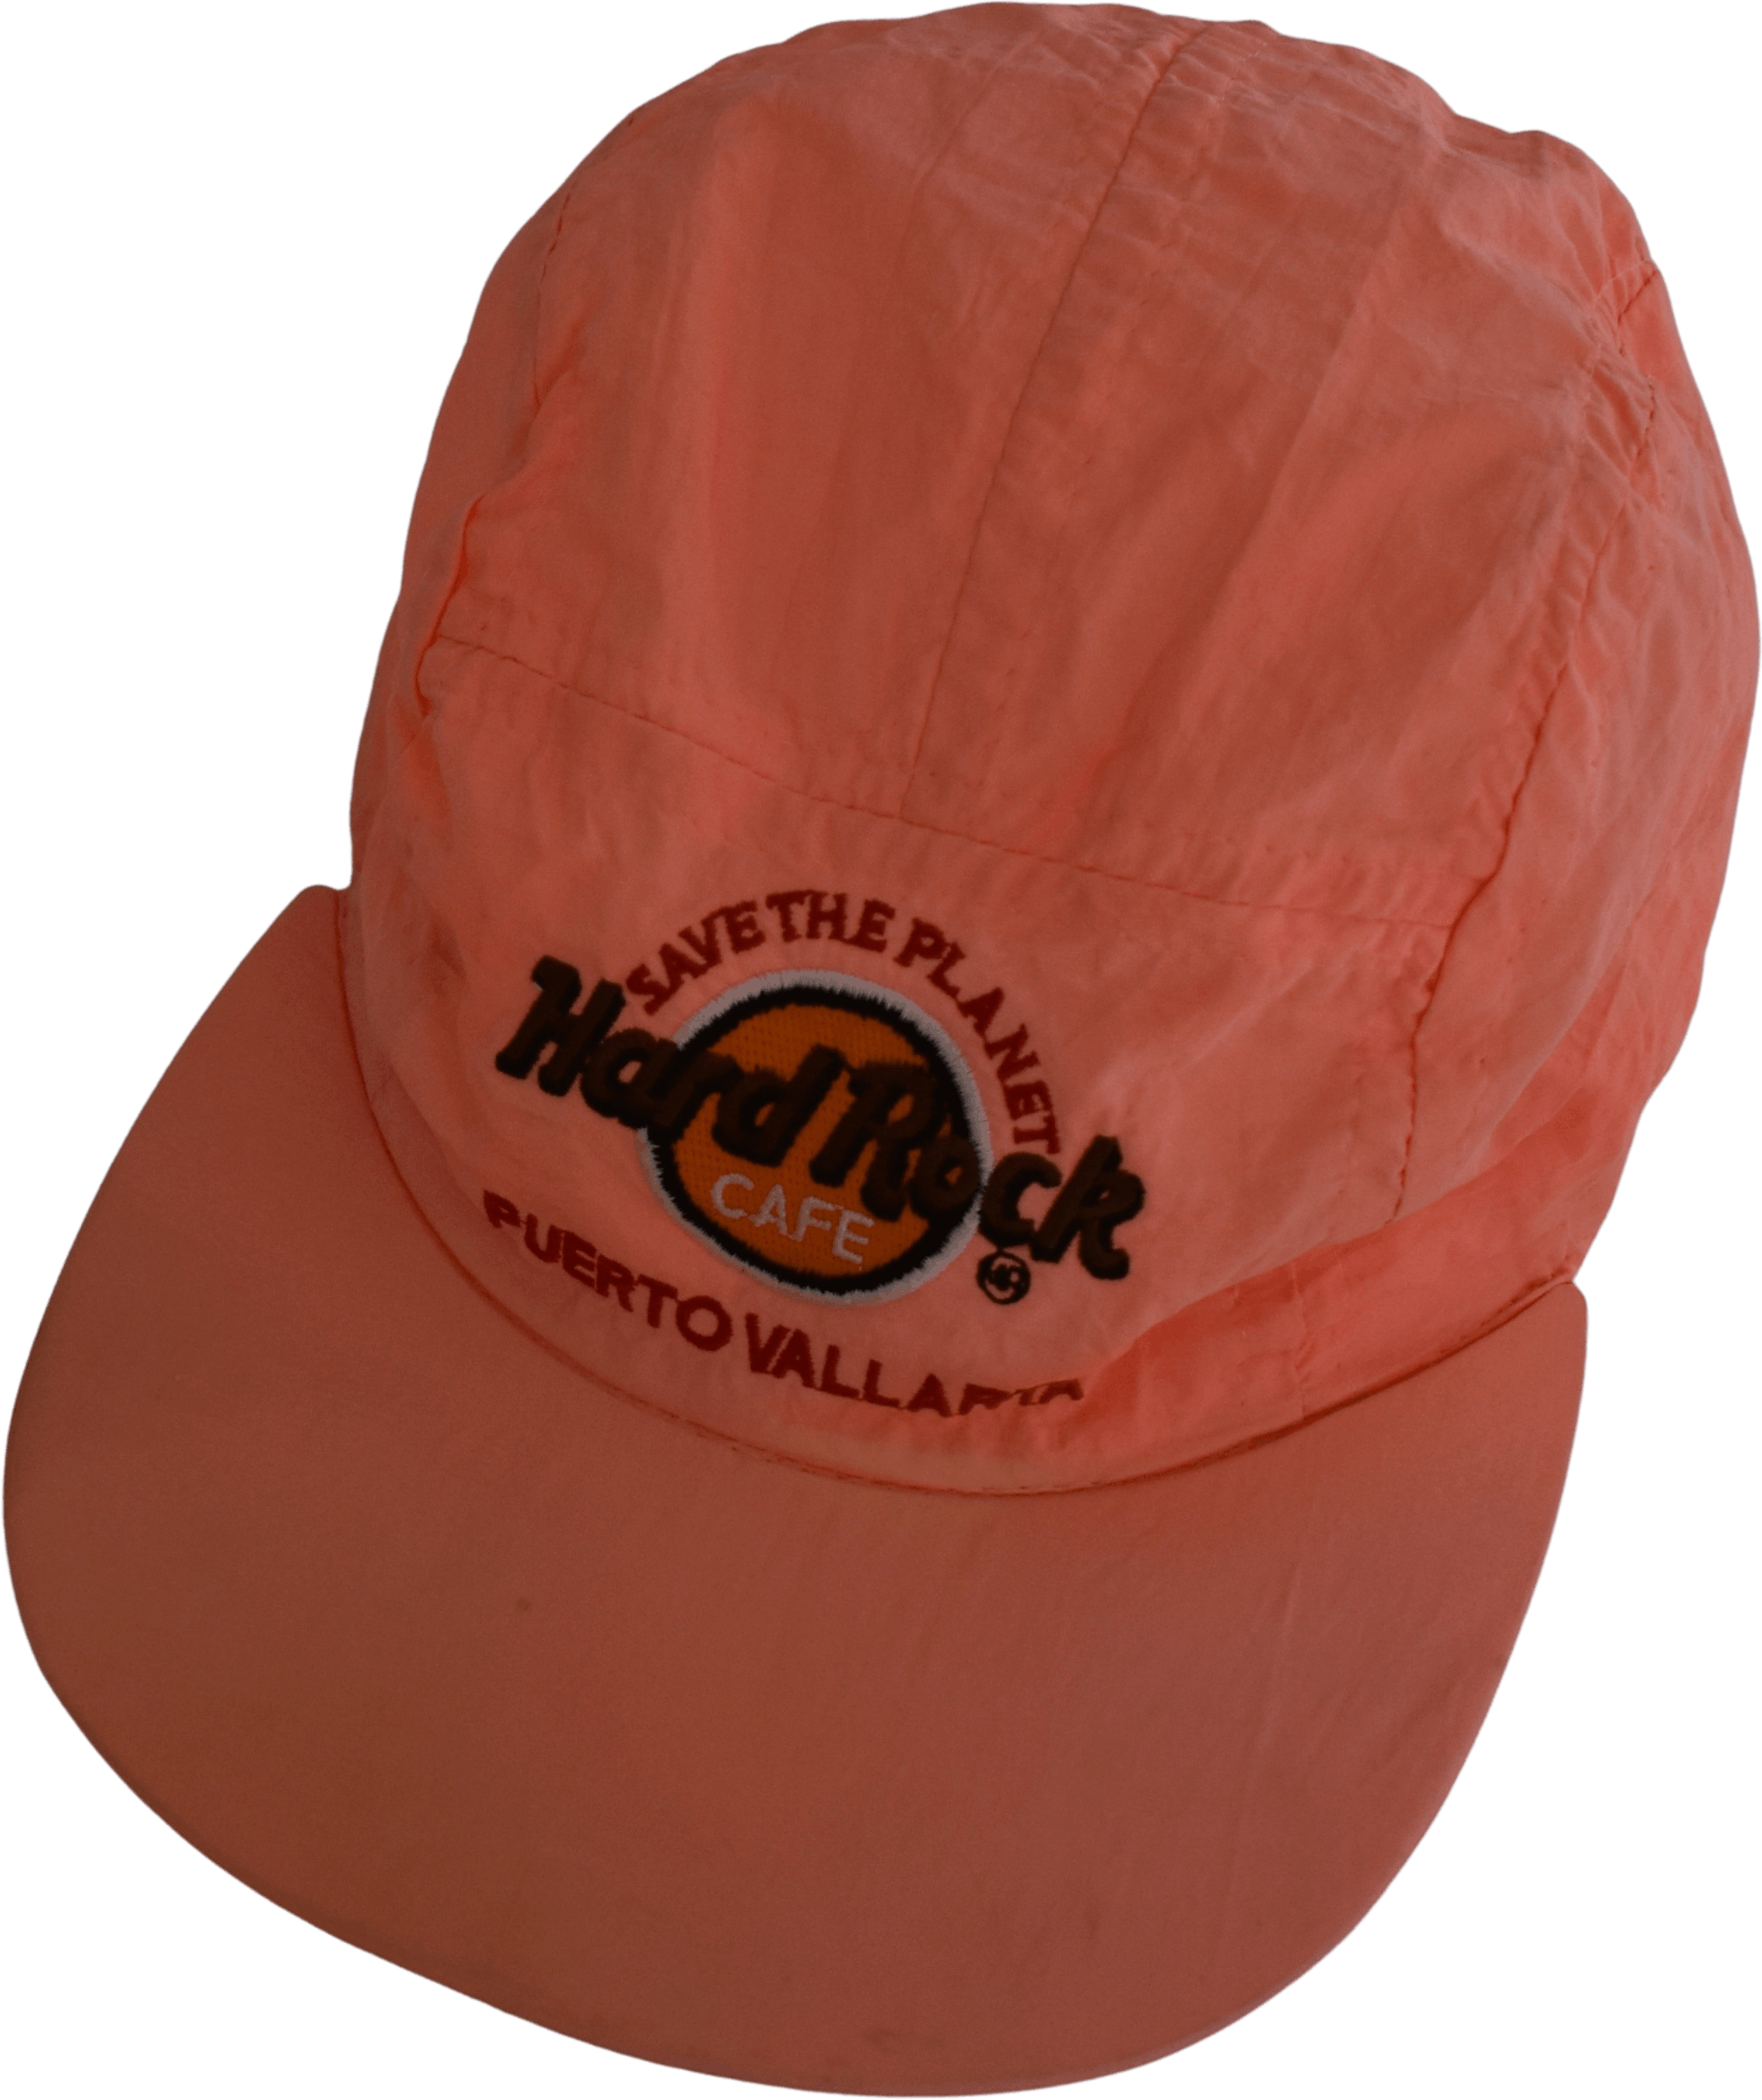 Vintage 80's Puerto Vallarta Hard Rock Café Hat by Cachuchas